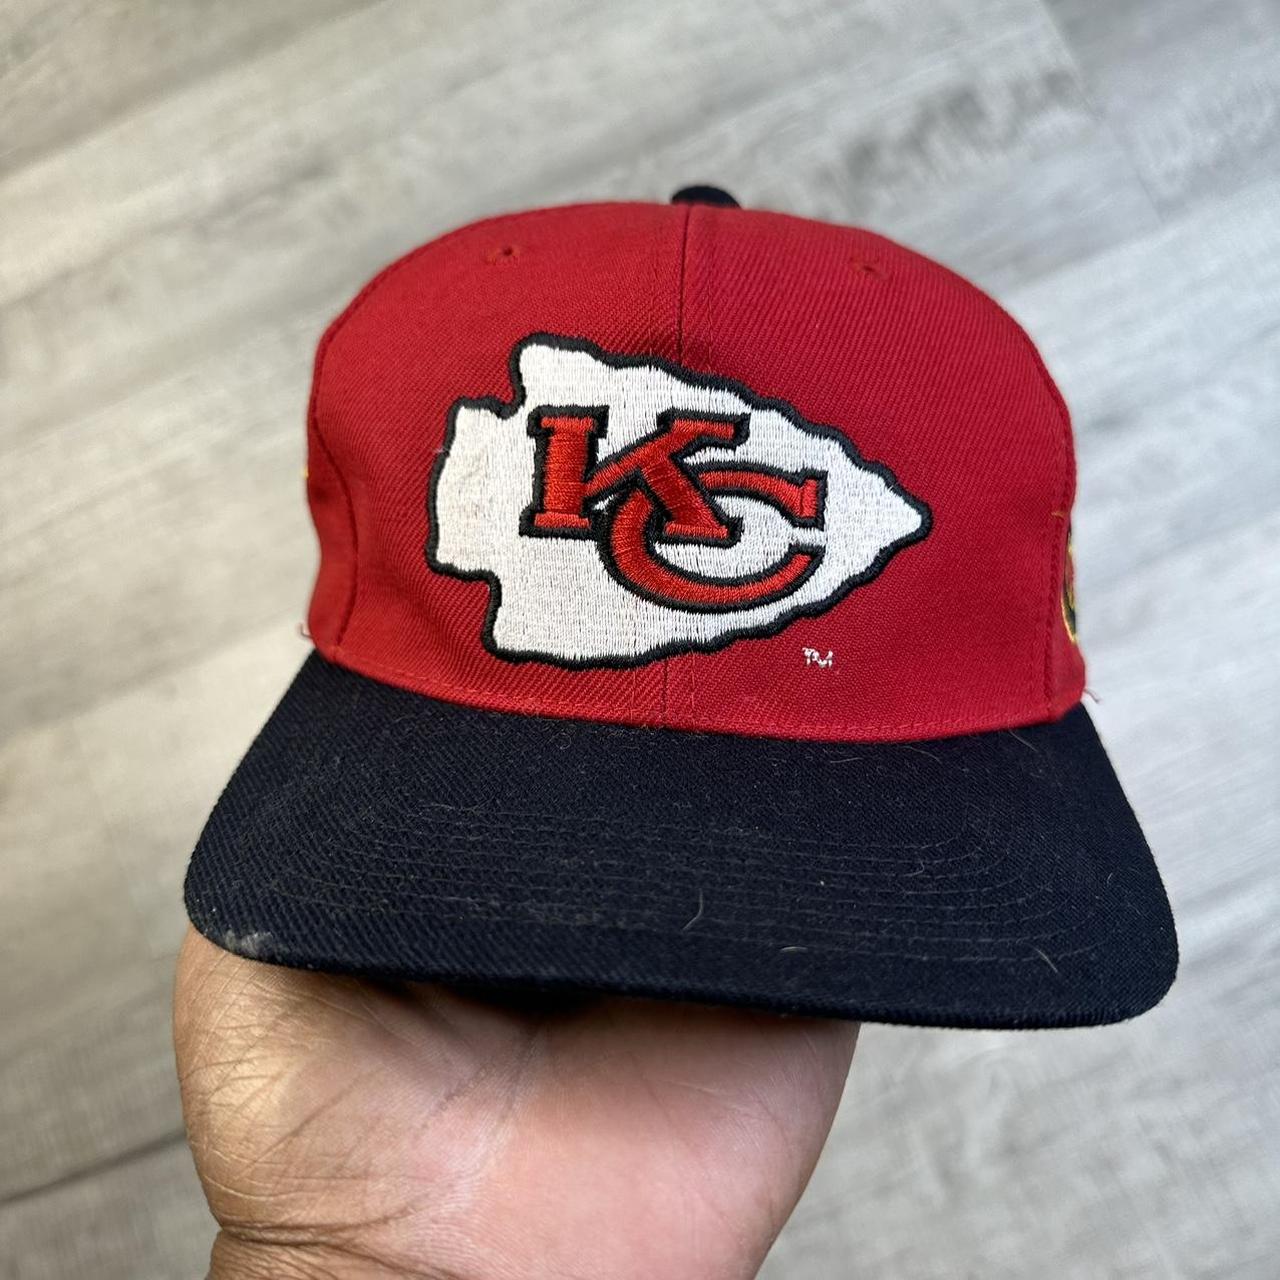 Vintage Kansas City Chiefs Hat Sports Specialties Cap Snapback Red Yellow